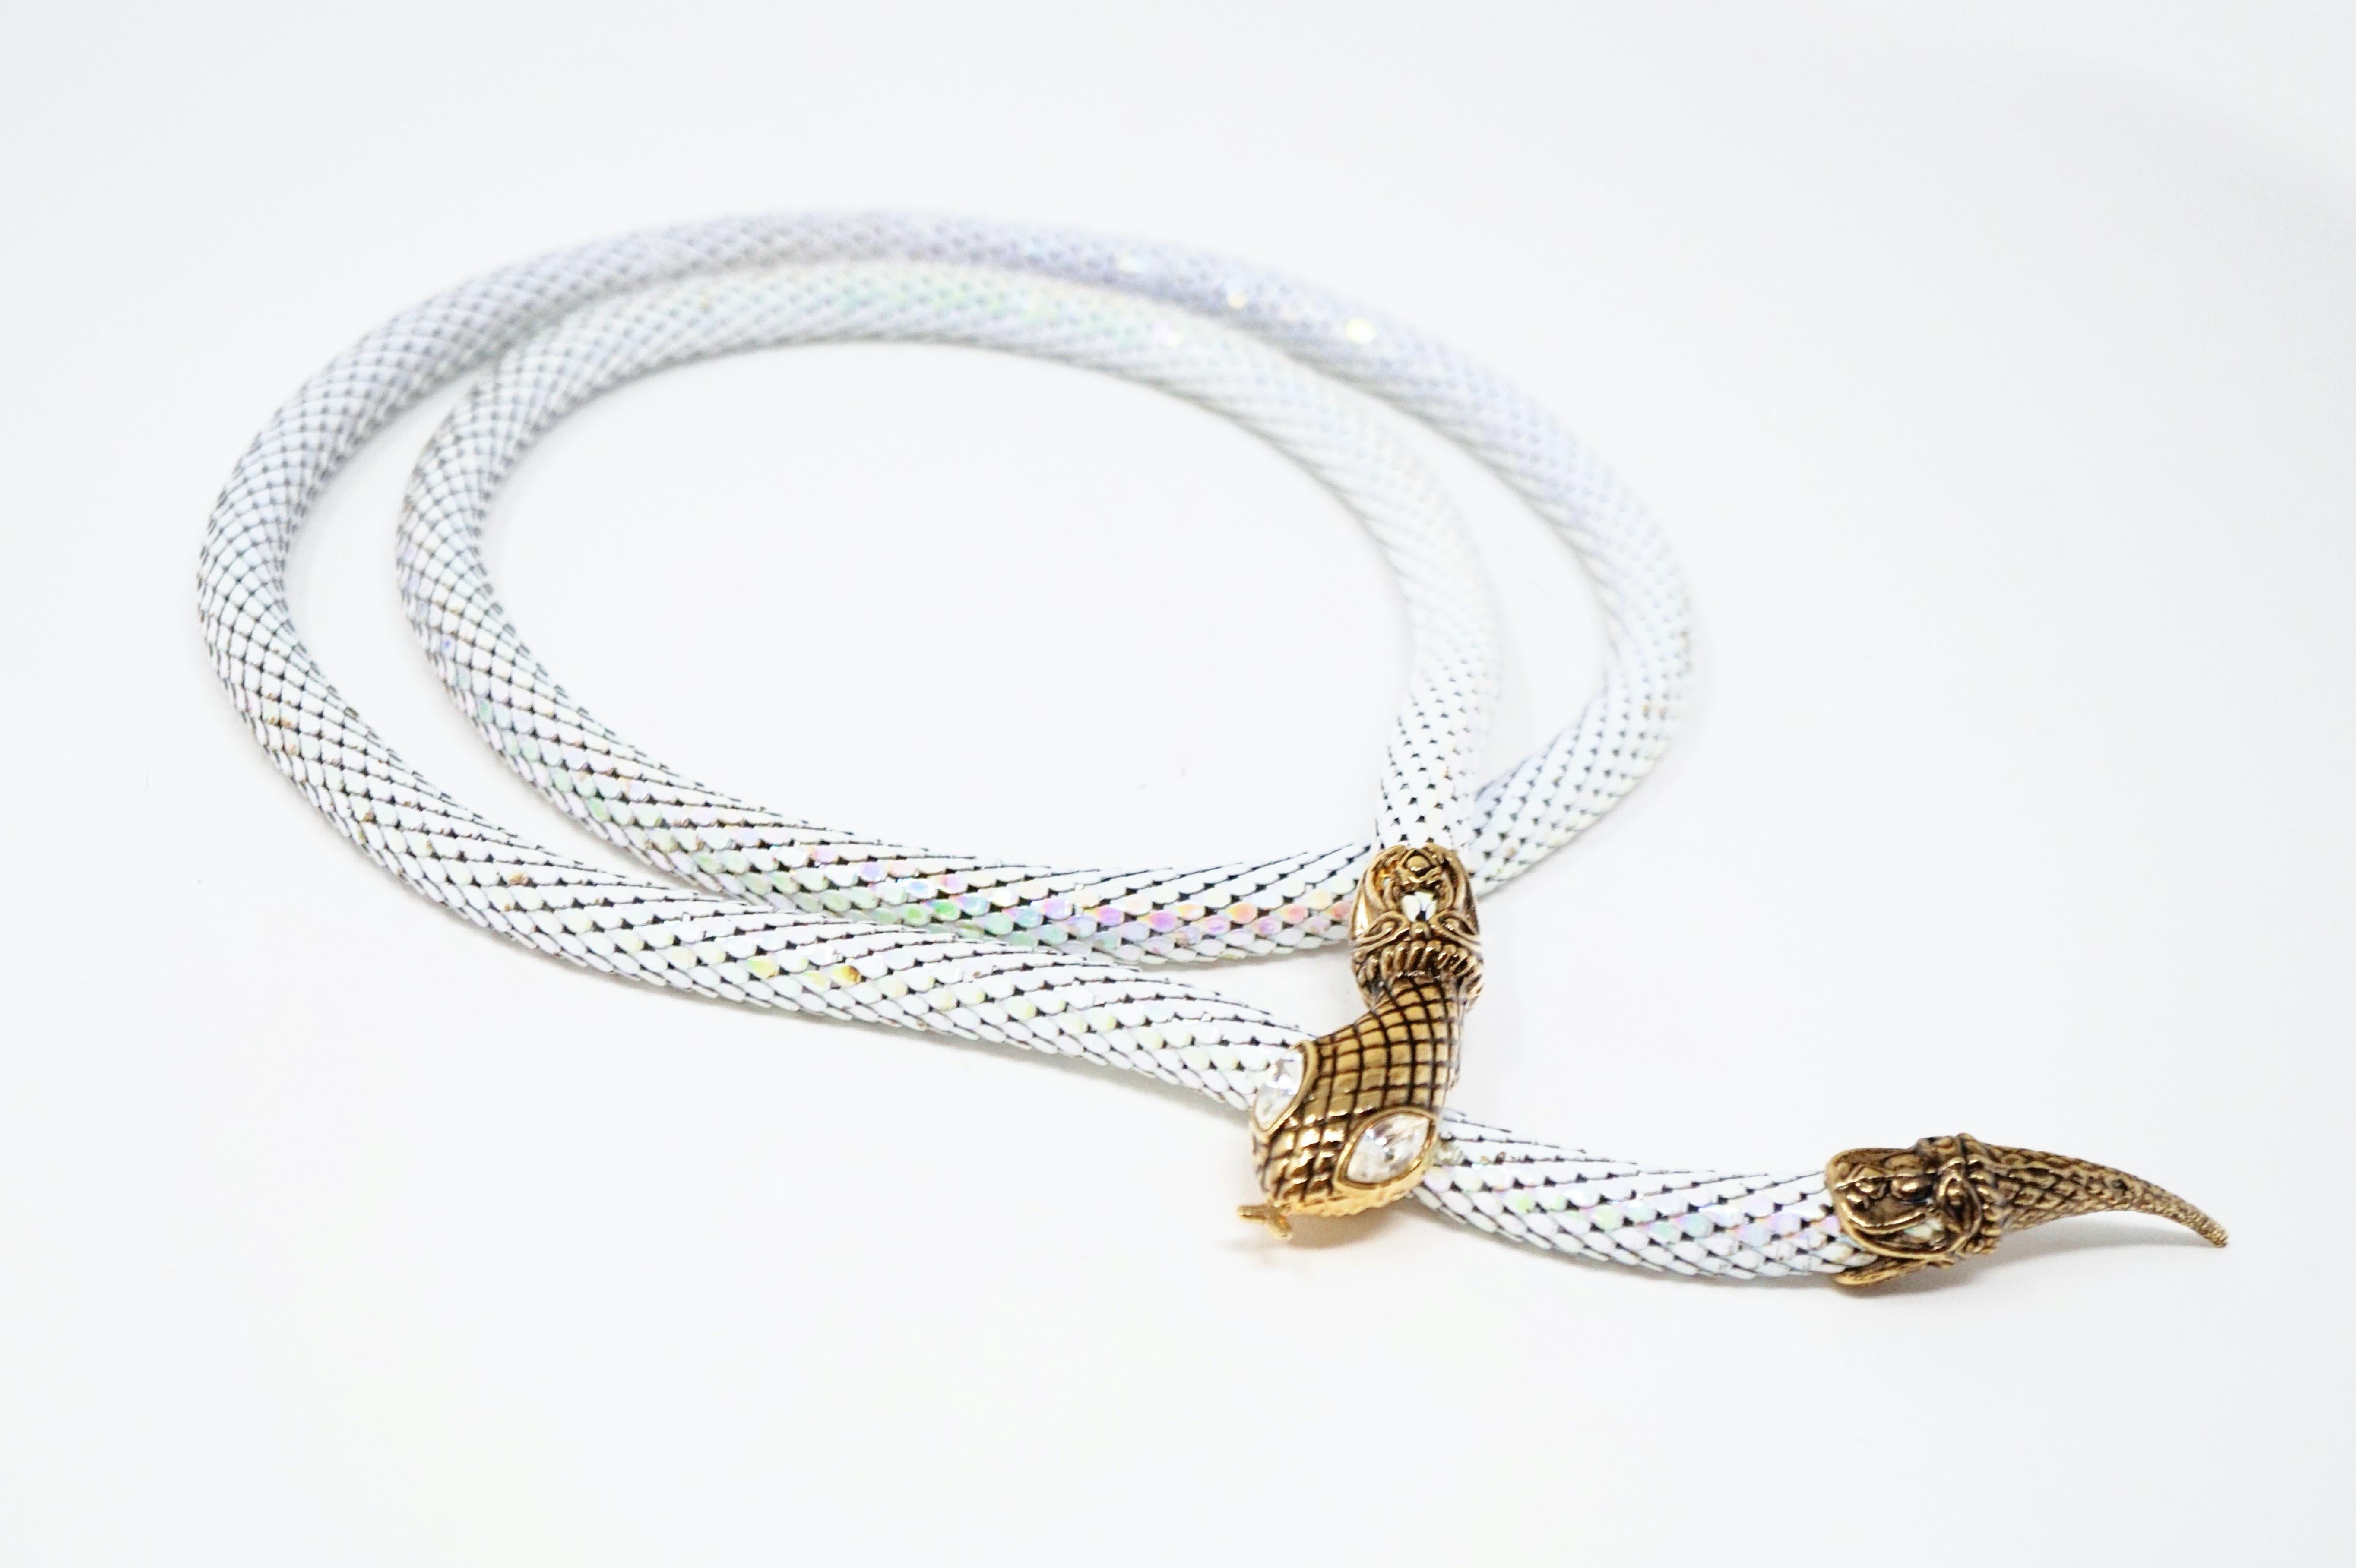 1980s Iridescent Mesh Snake Belt or Necklace by DL Auld Co, Signed 6